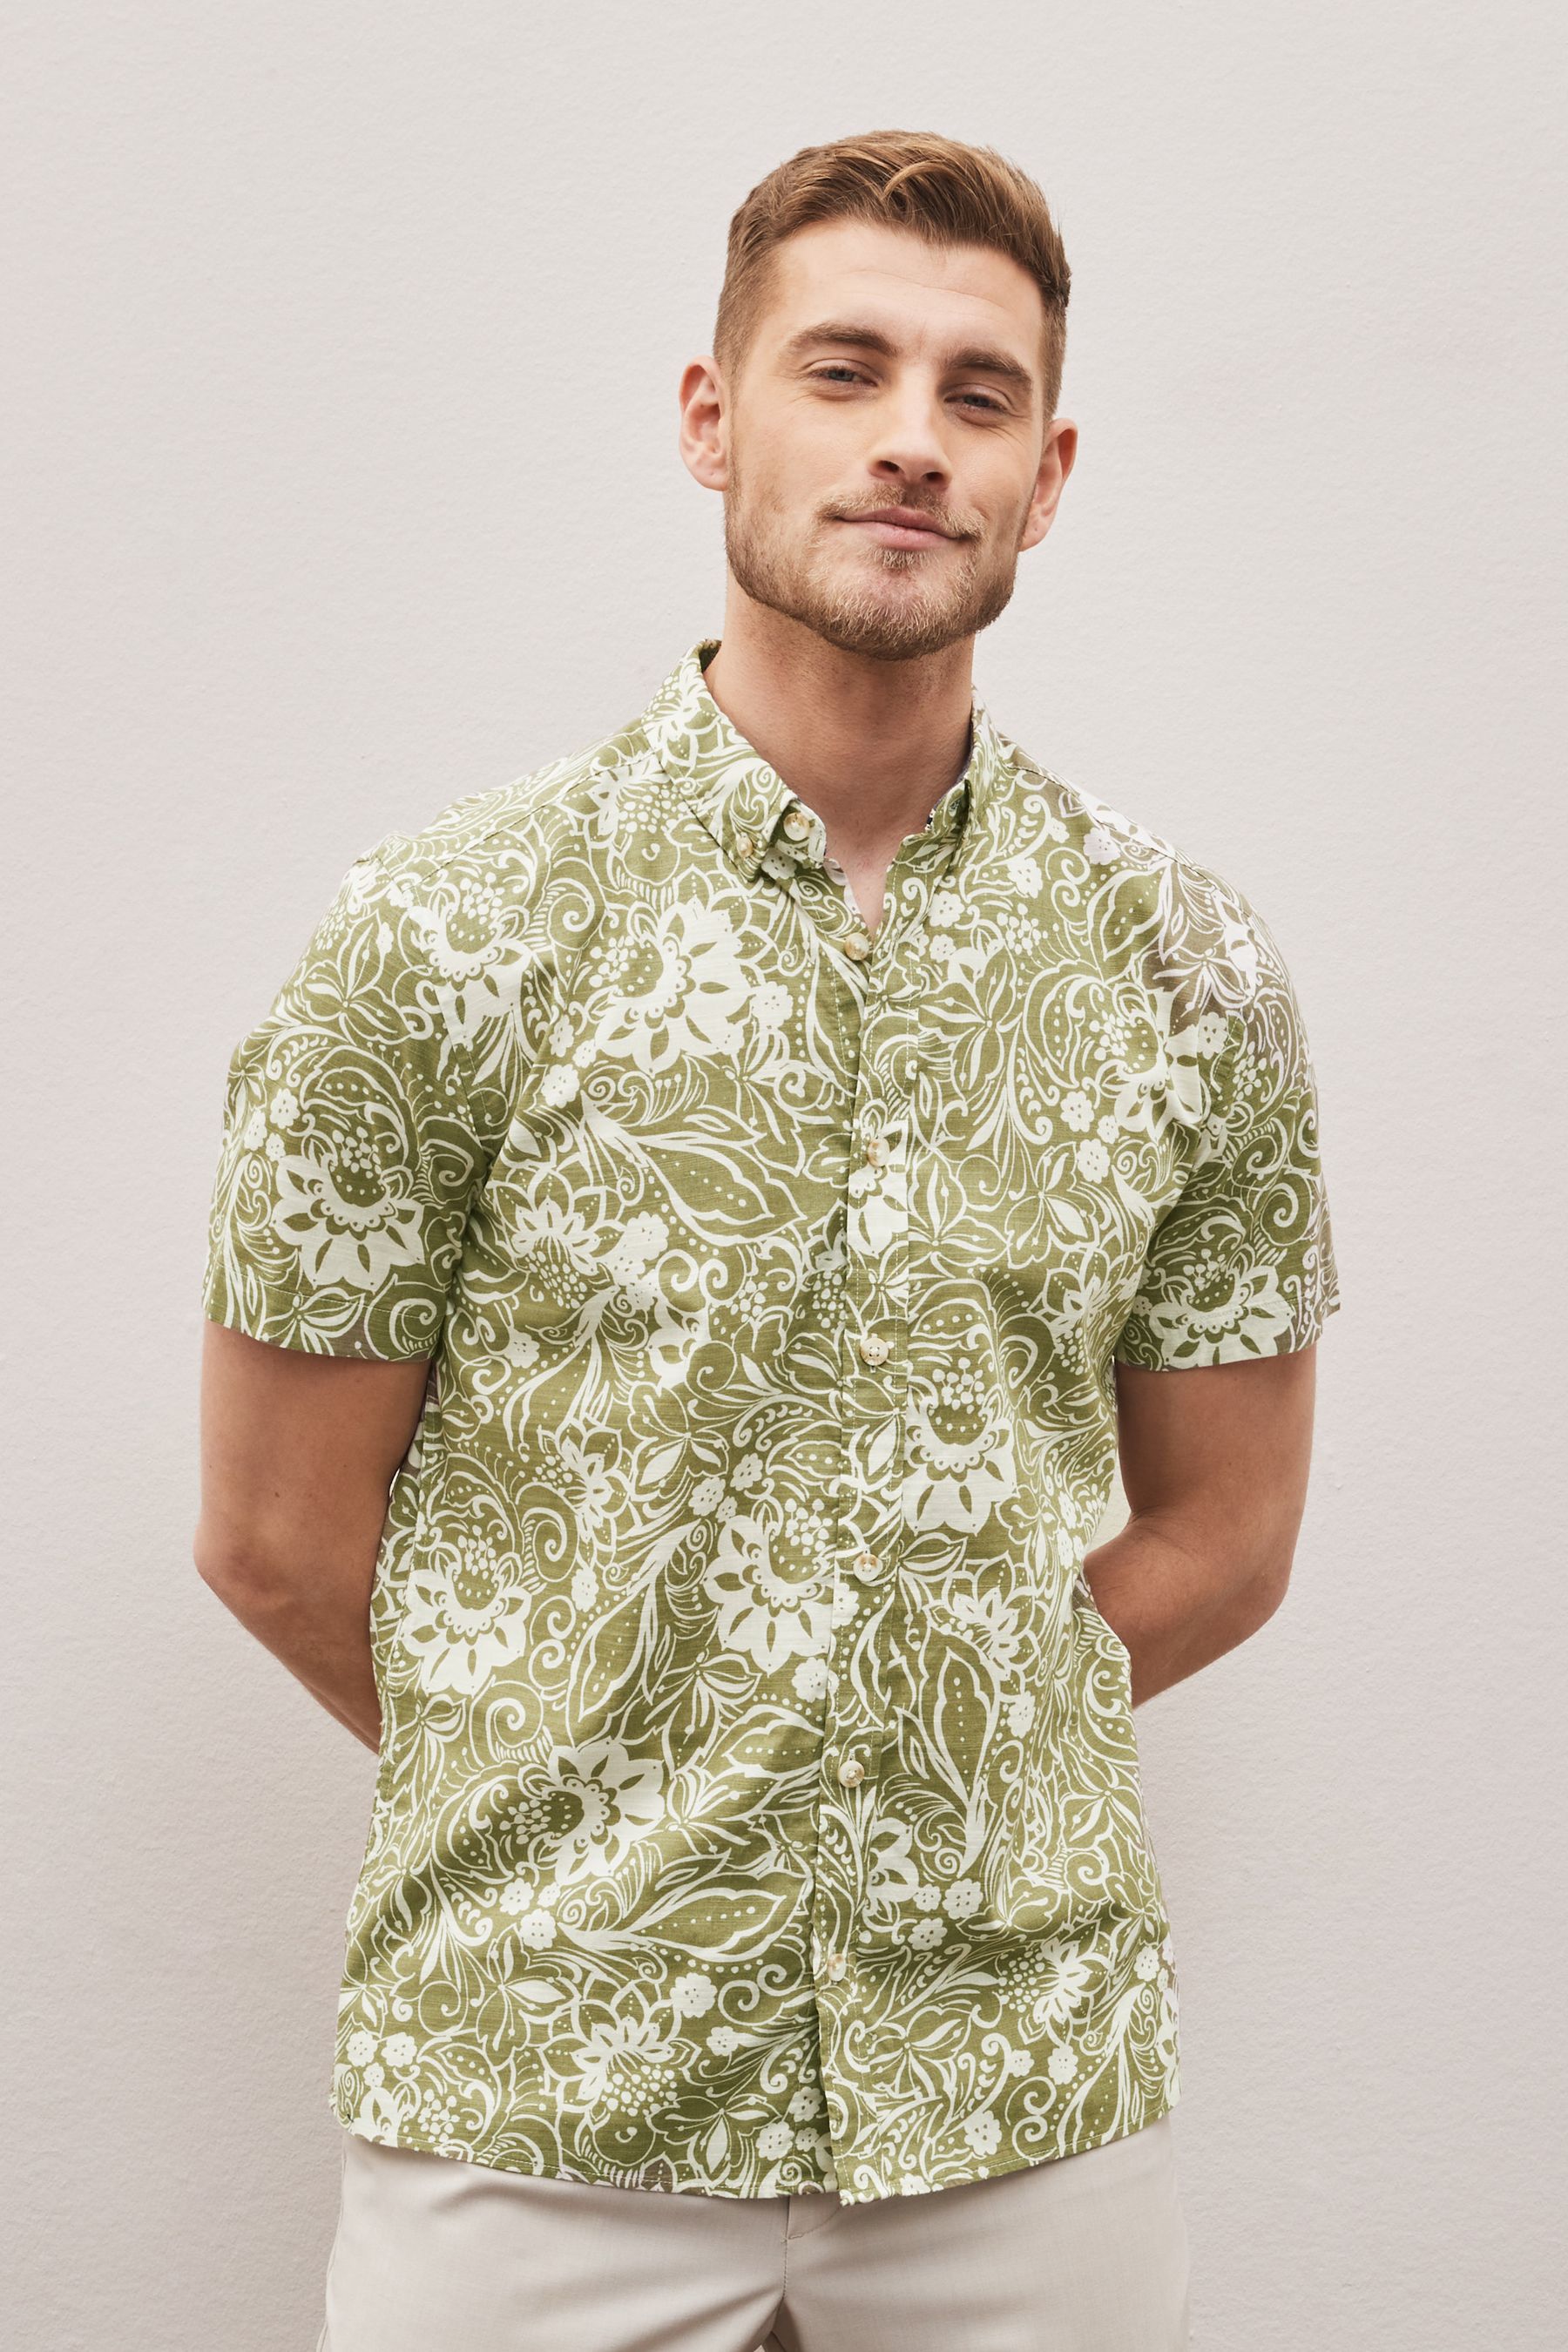 Buy Hawaiian Printed Short Sleeve Shirt from Next Ireland